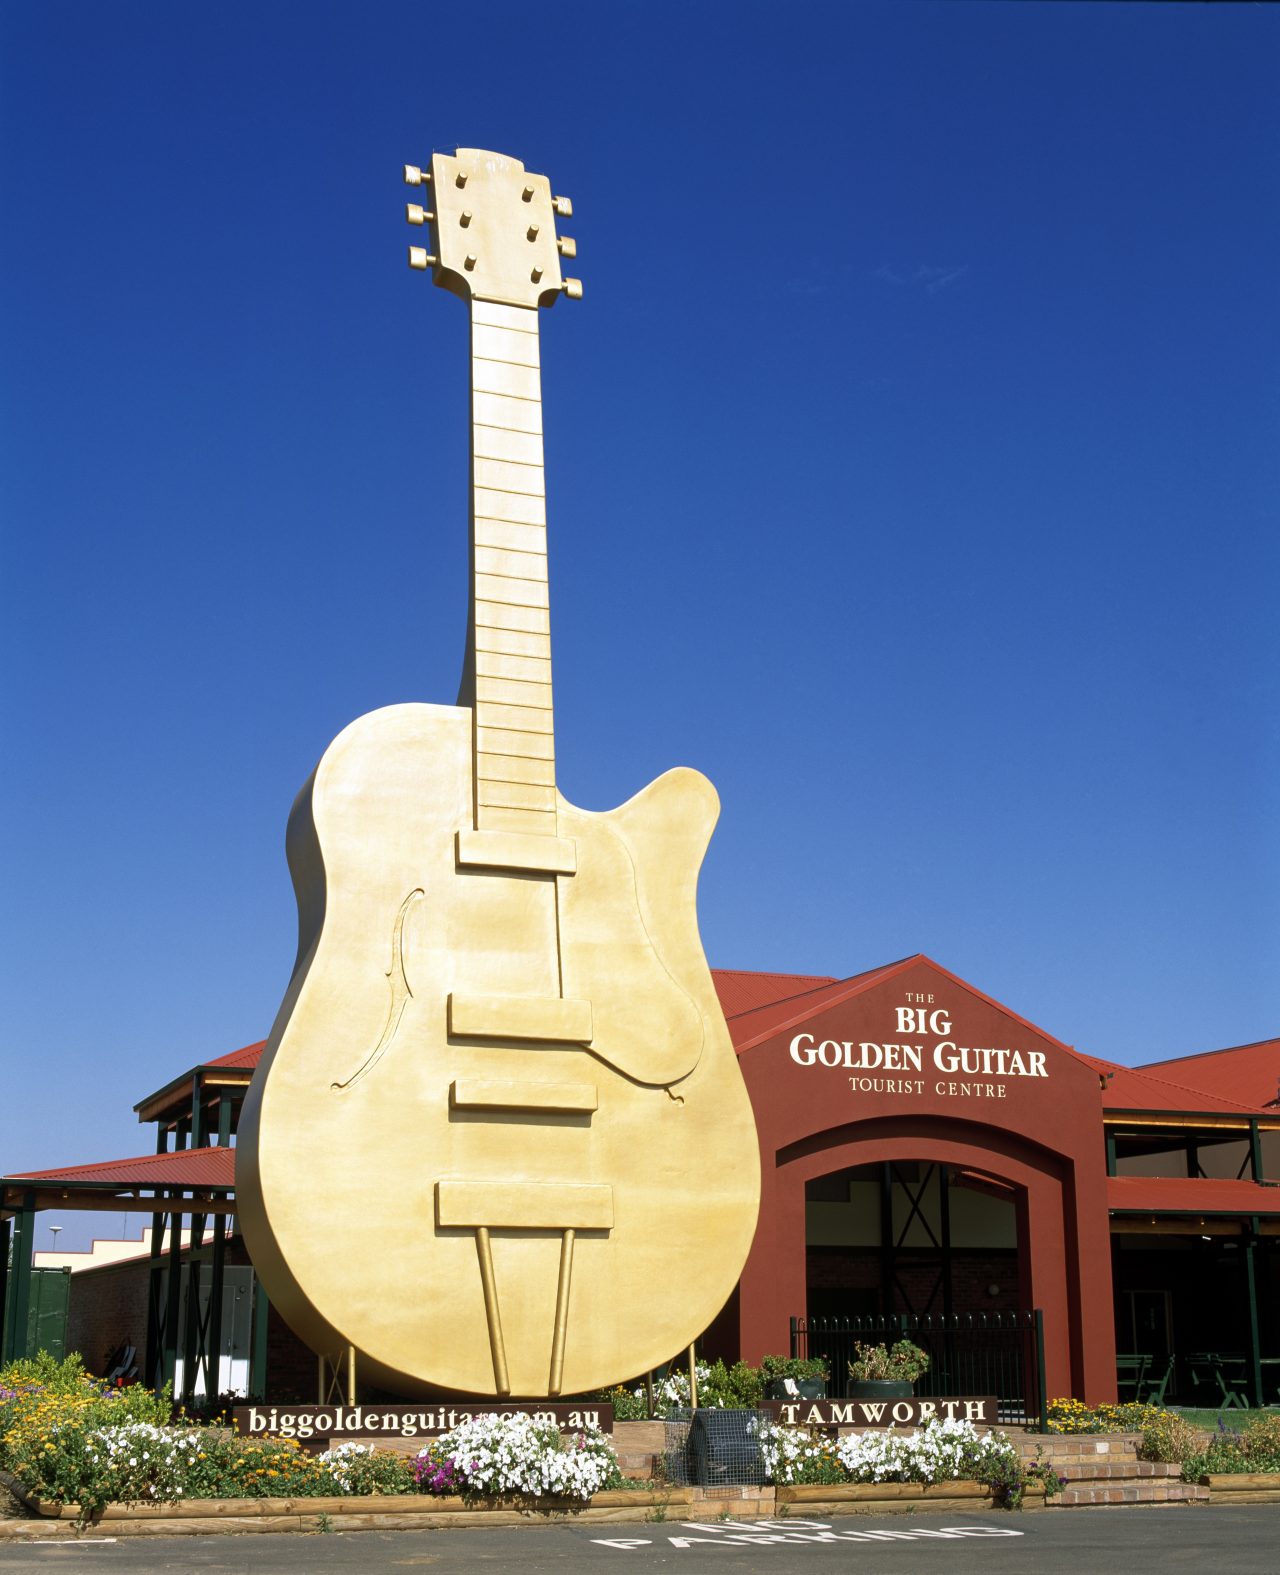 The Big Golden Guitar, Tamworth, NSW